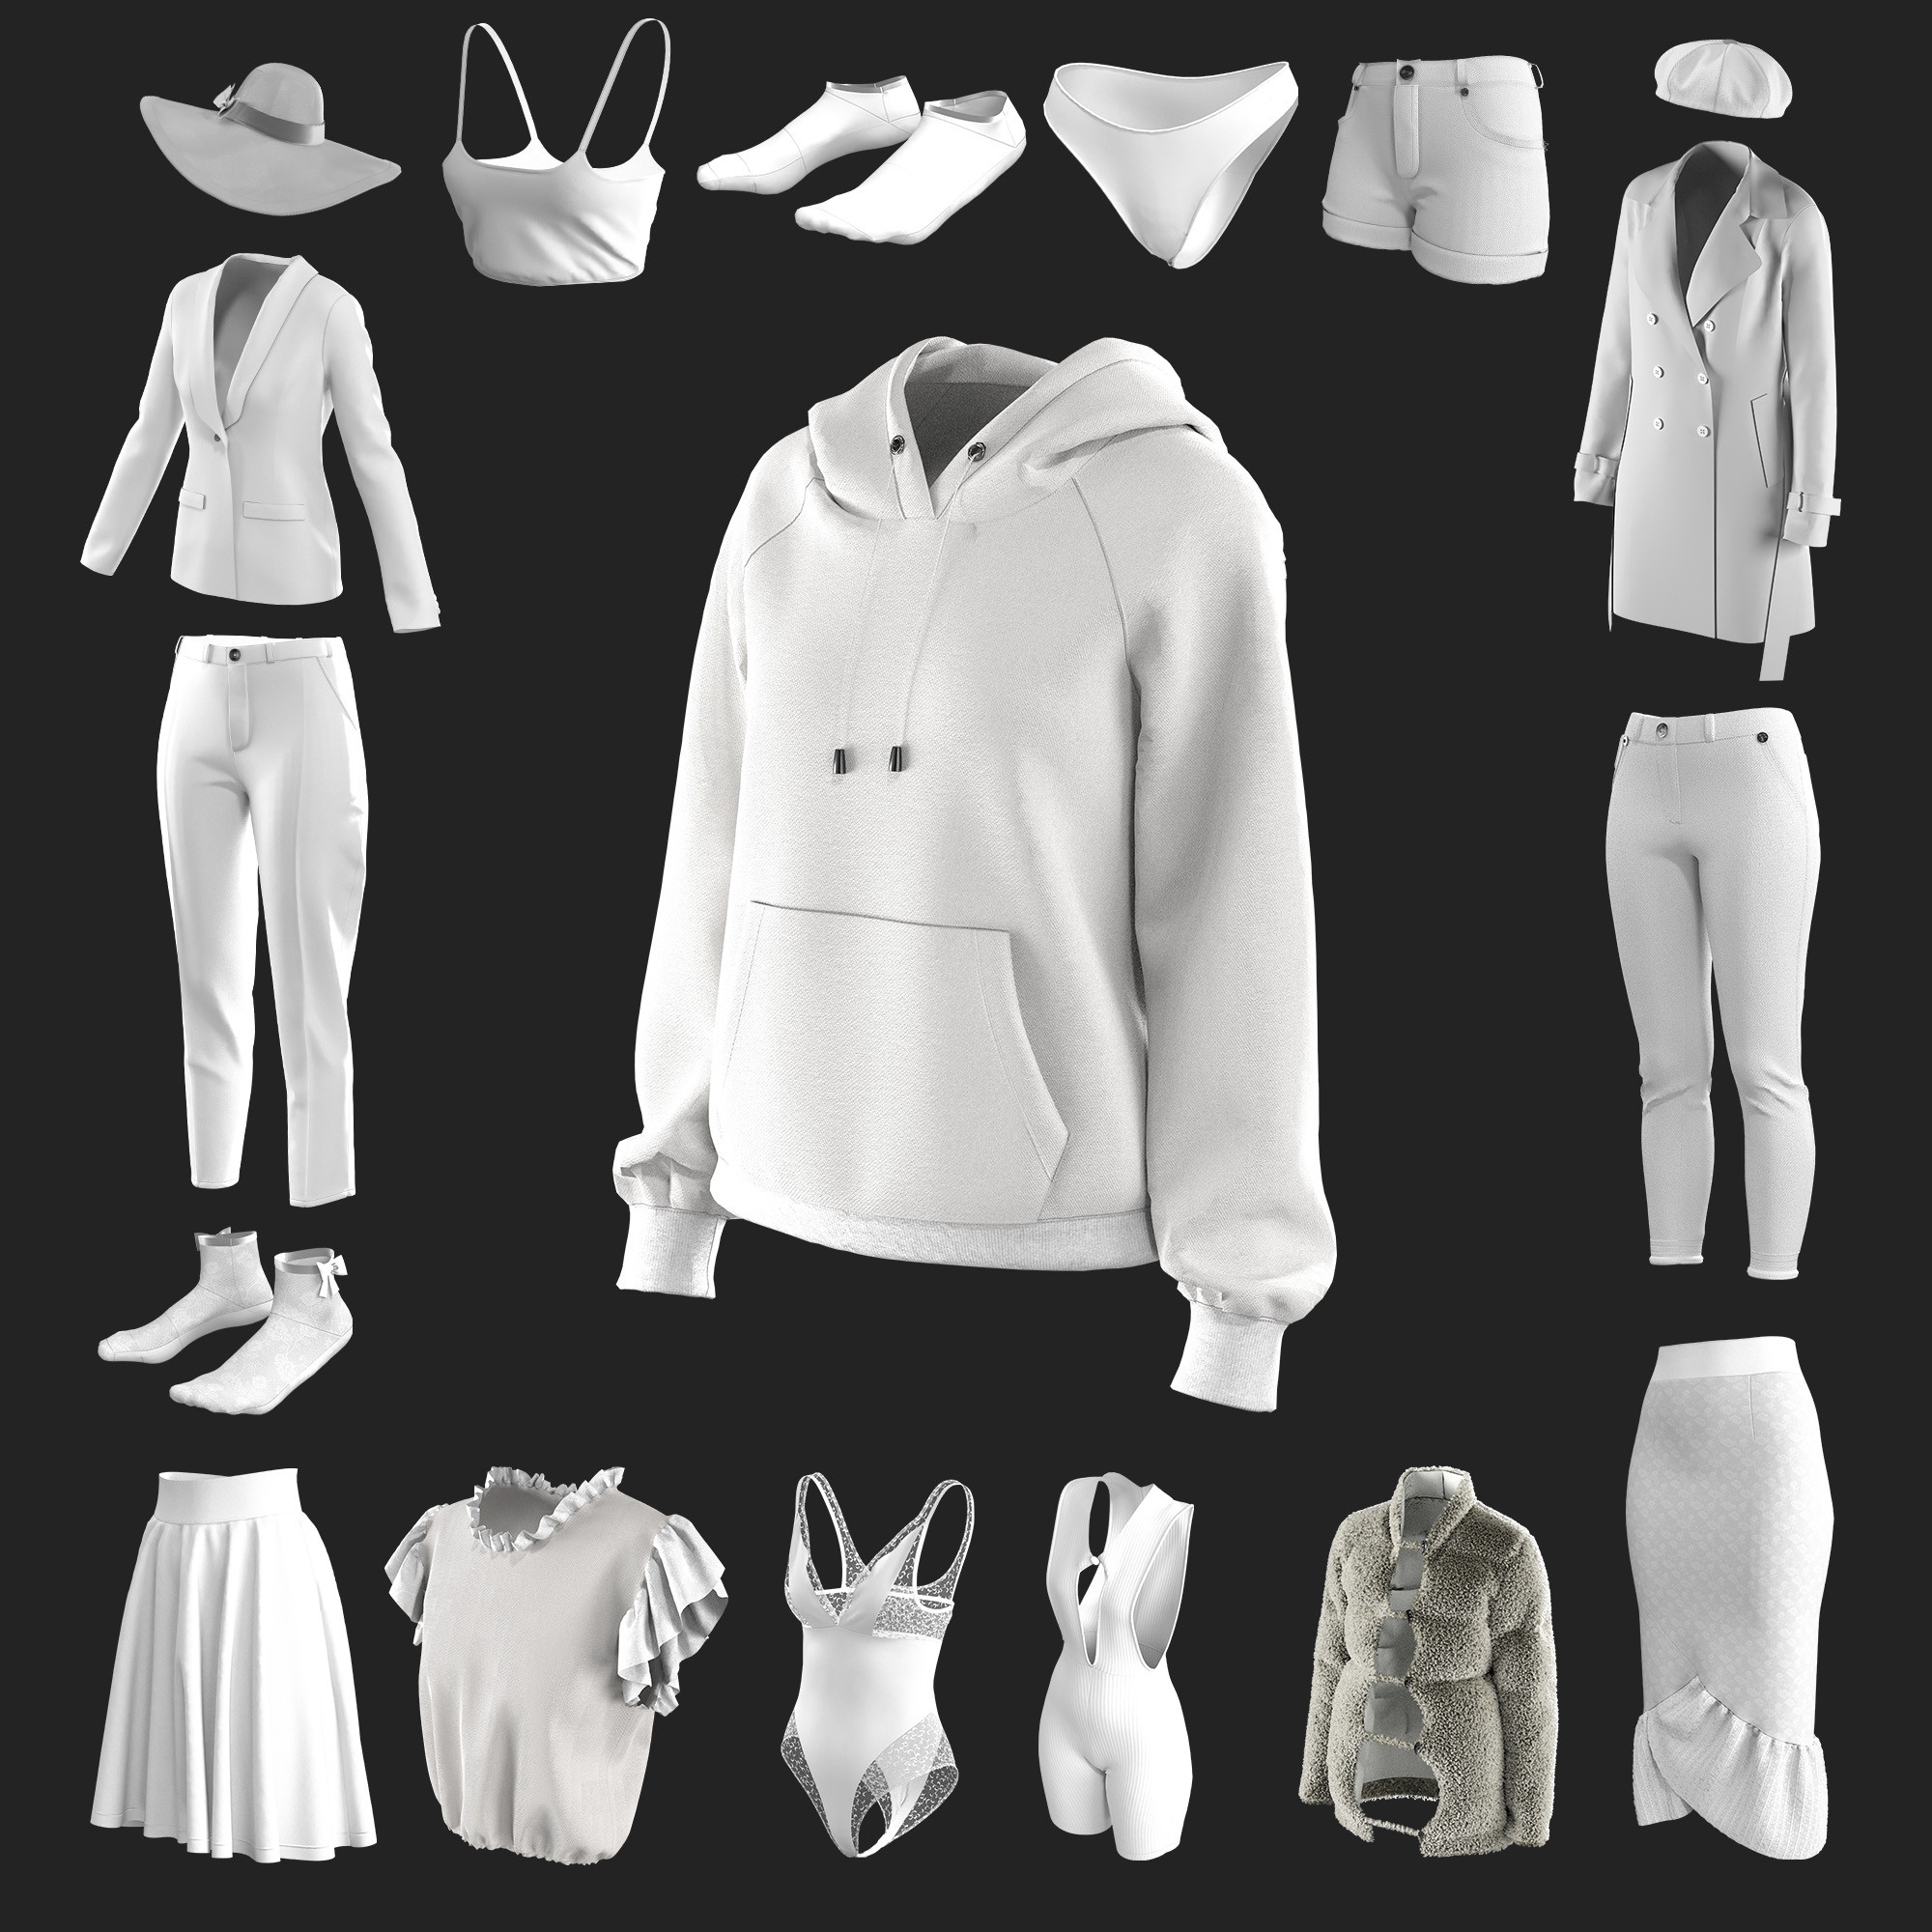 TOBart - 27 BASIC WOMEN'S CLOTHES / Marvelous Designer / Clo 3D + ZPRJ ...